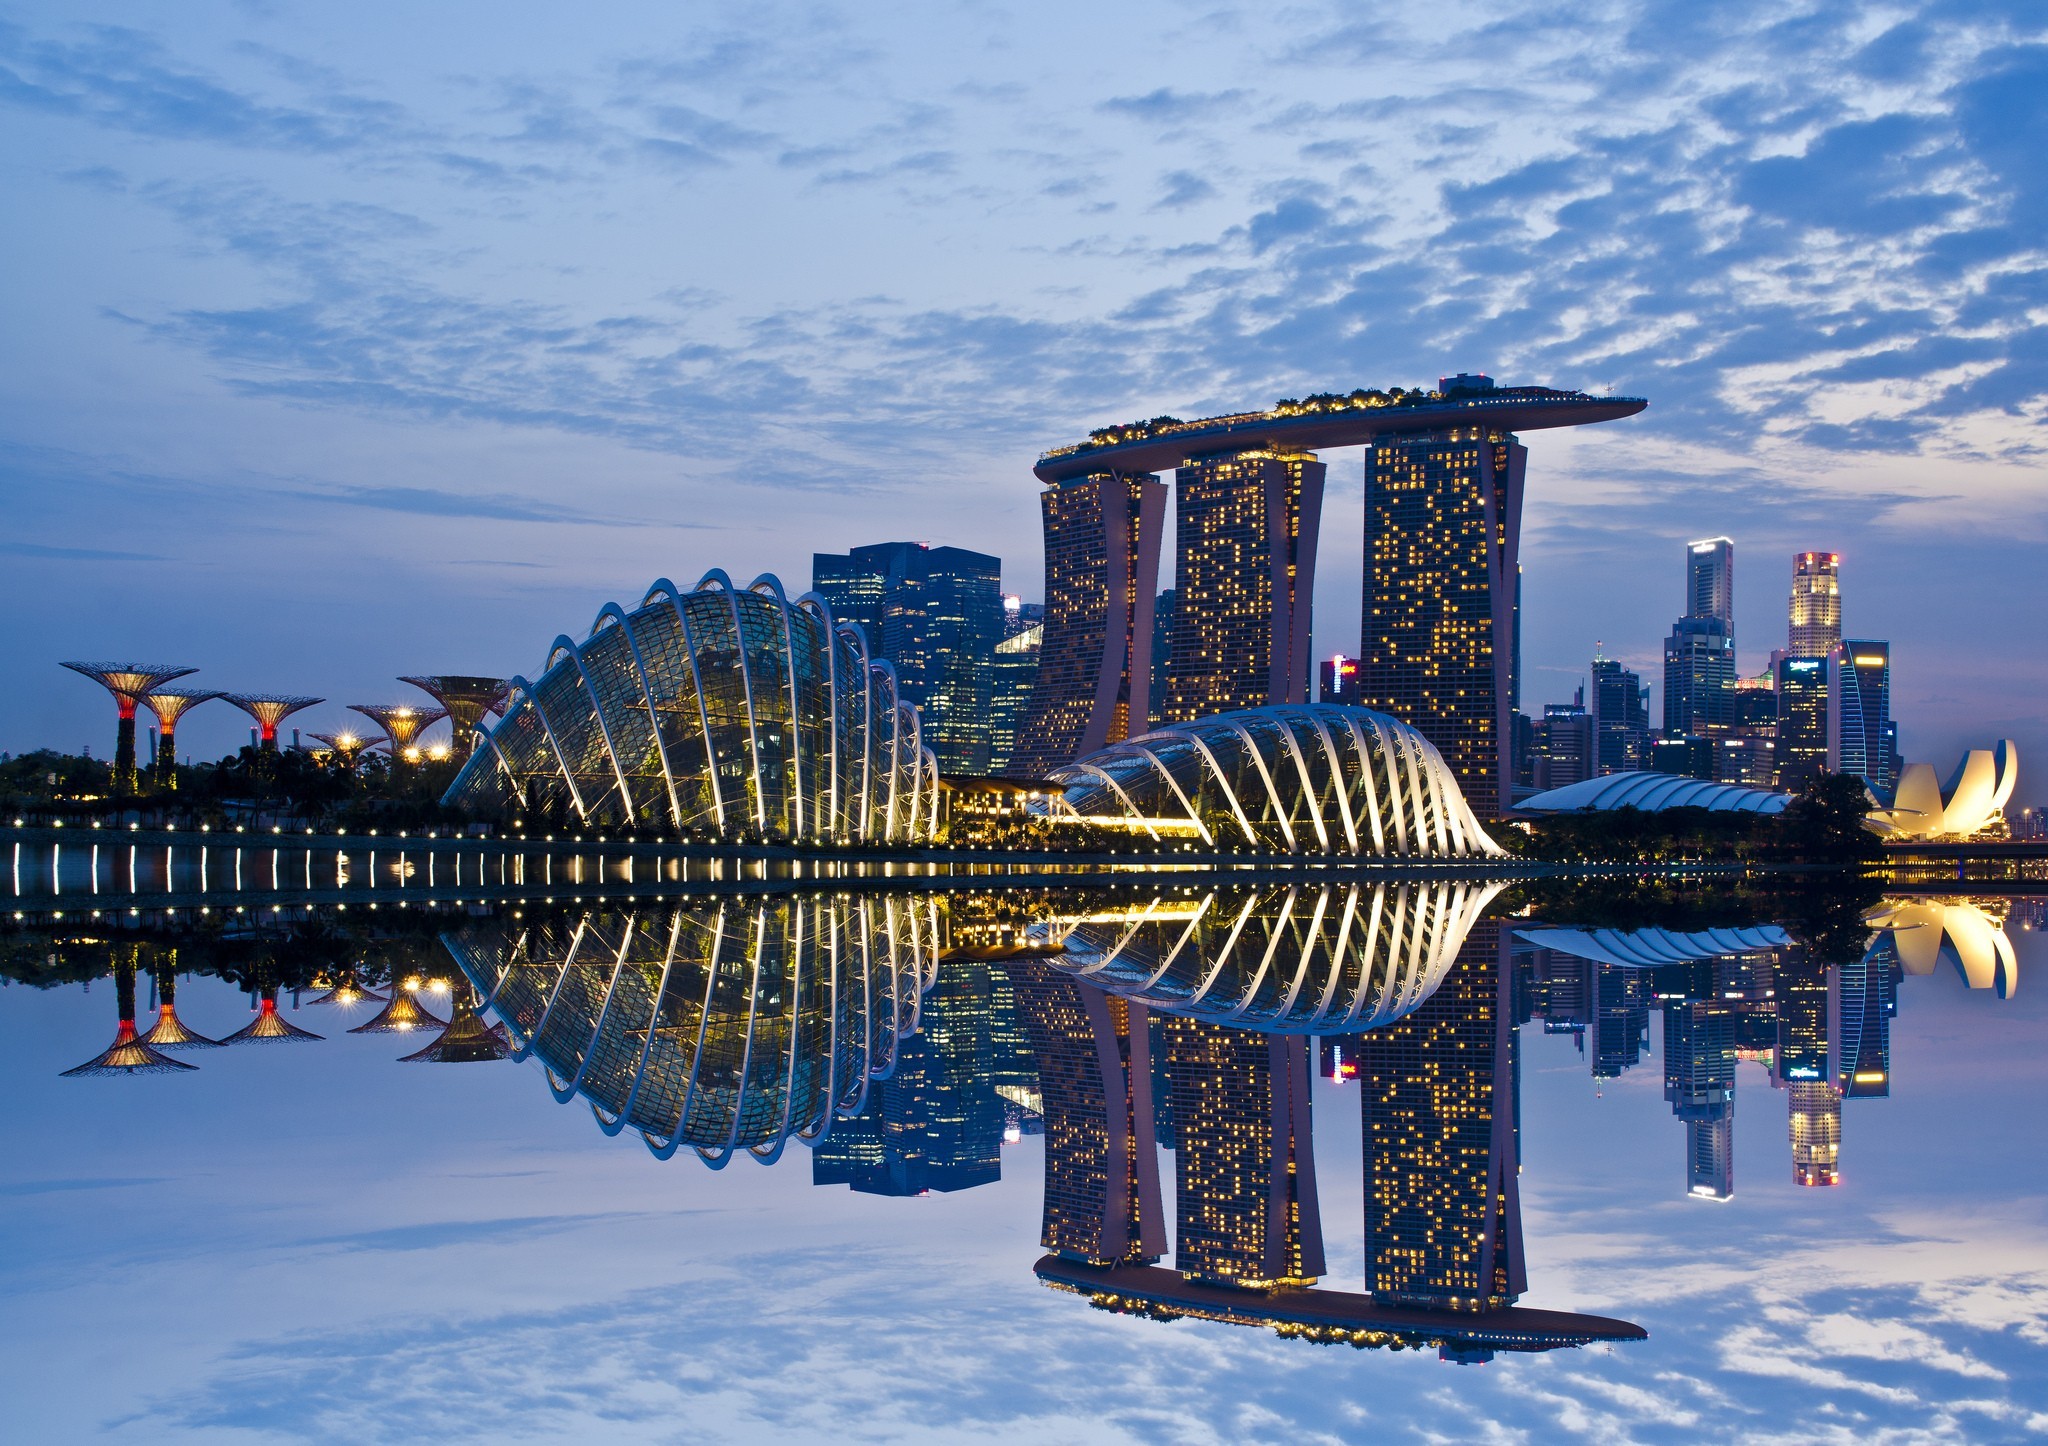 General 2048x1446 cityscape architecture reflection Singapore Marina Bay Asia city lights